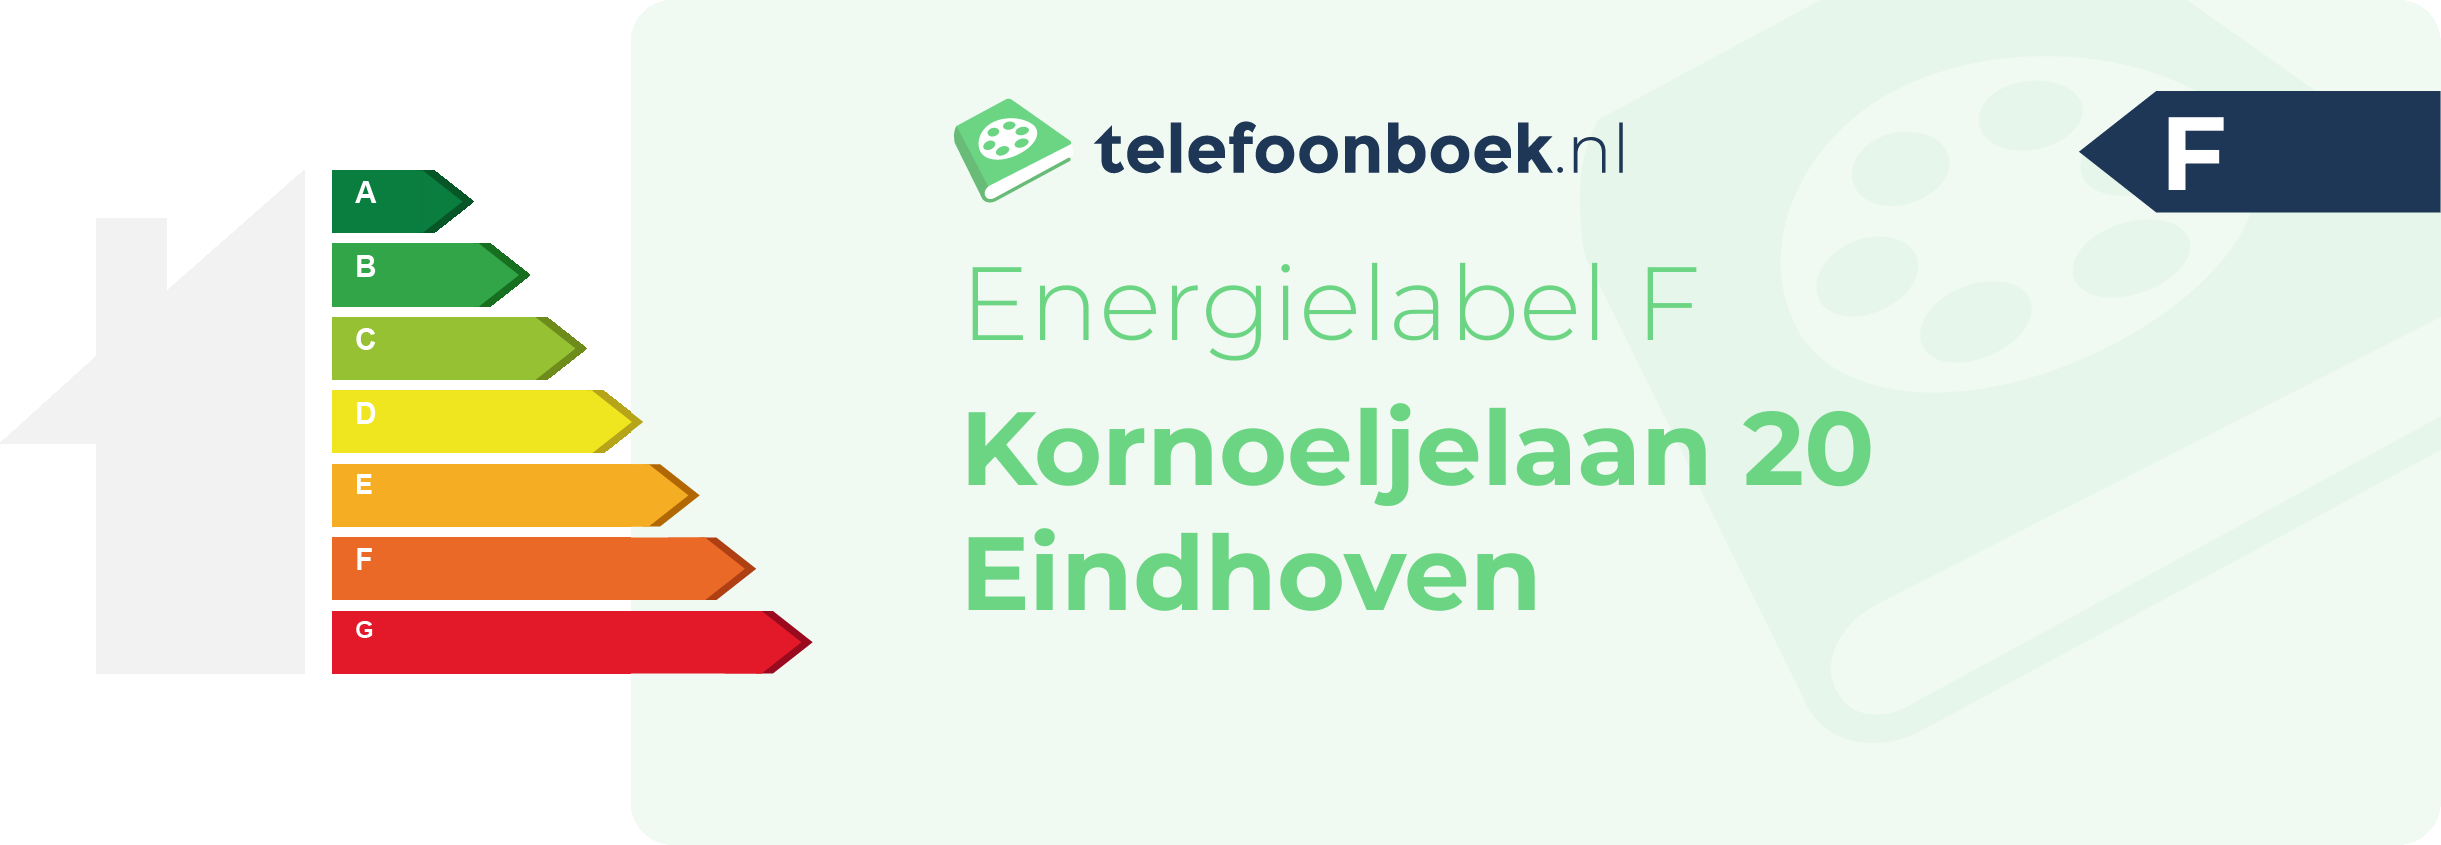 Energielabel Kornoeljelaan 20 Eindhoven